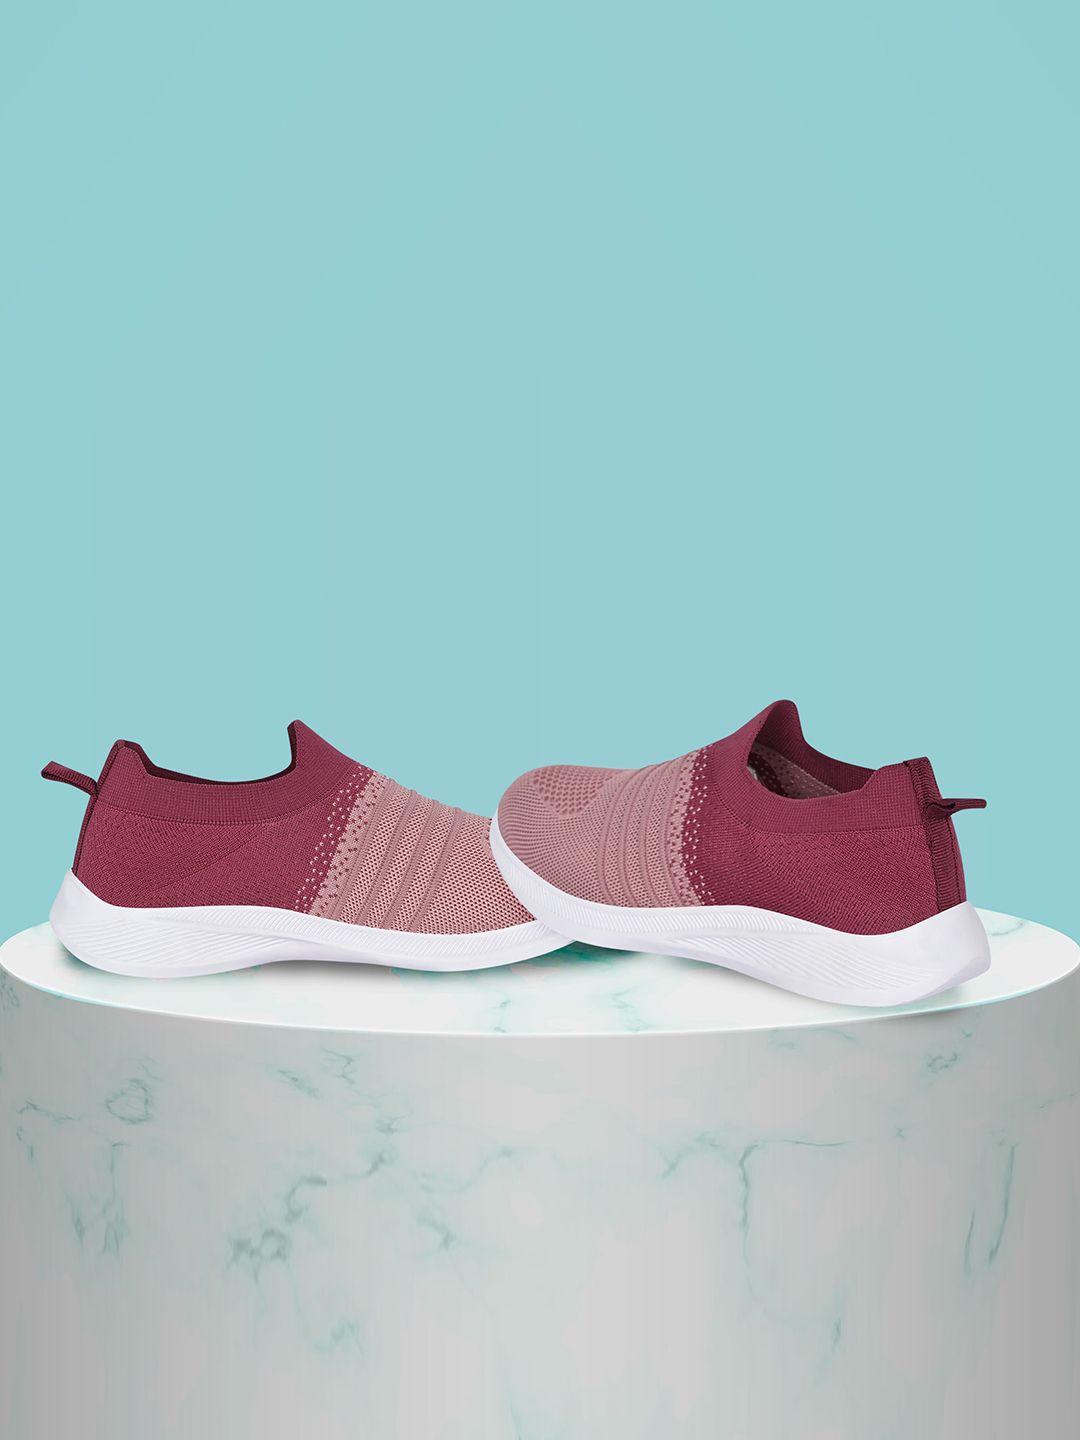 tpent women woven design antibacterial mesh comfort insole contrast sole sneakers